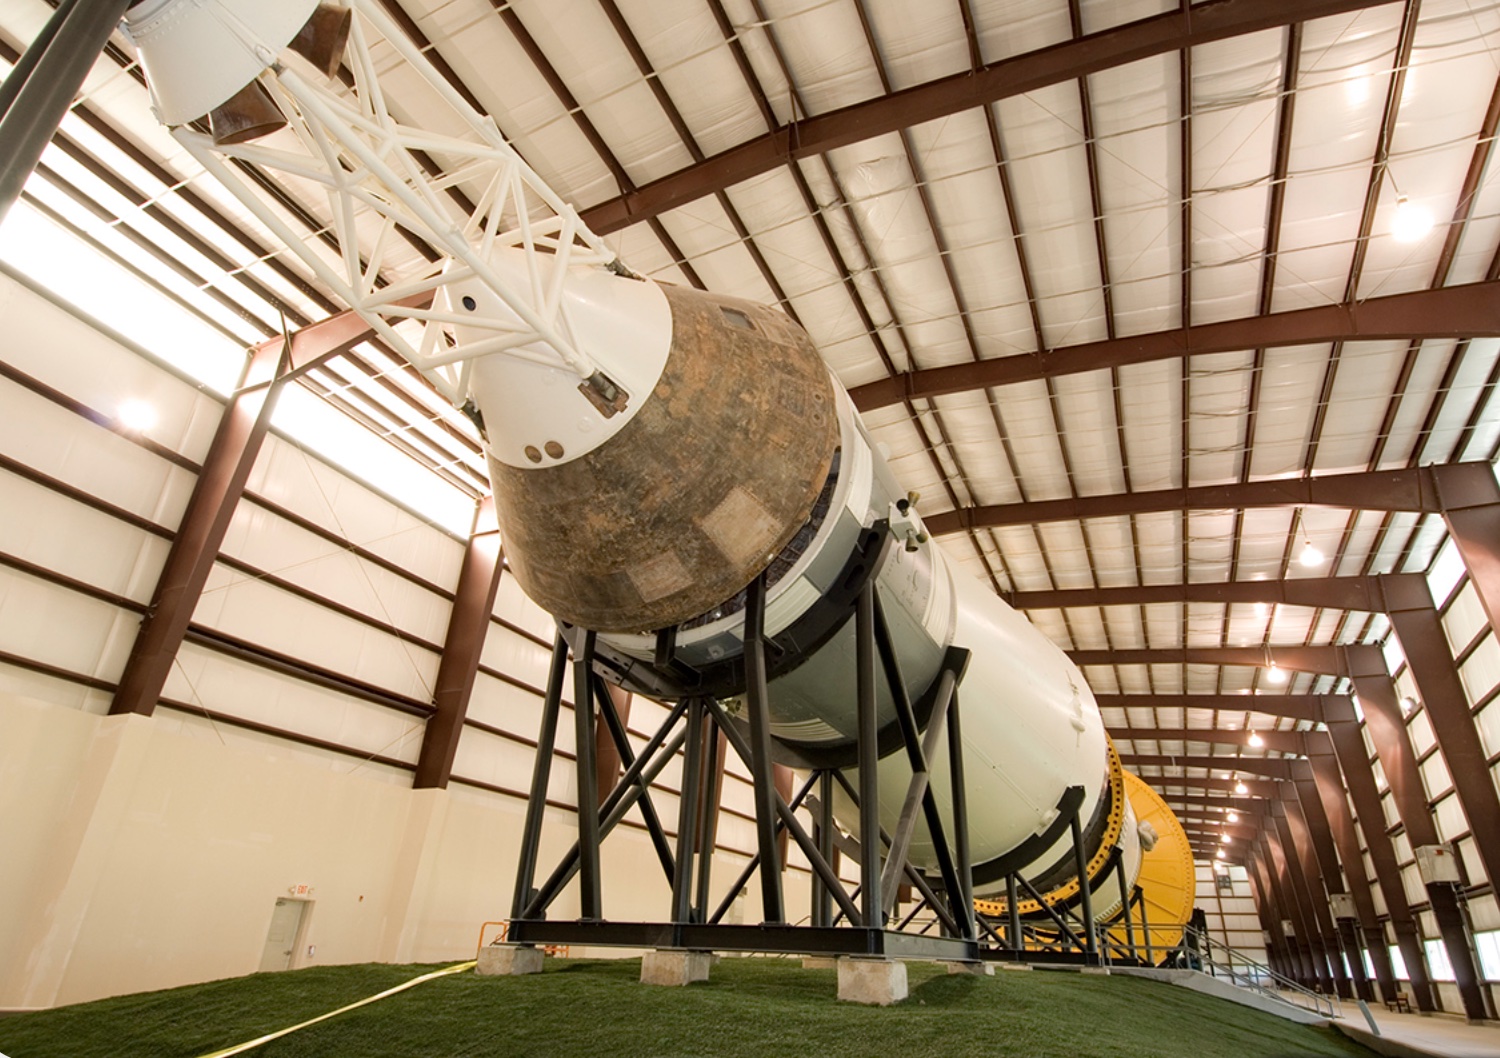 Rocket in NASA's Space Center Houston